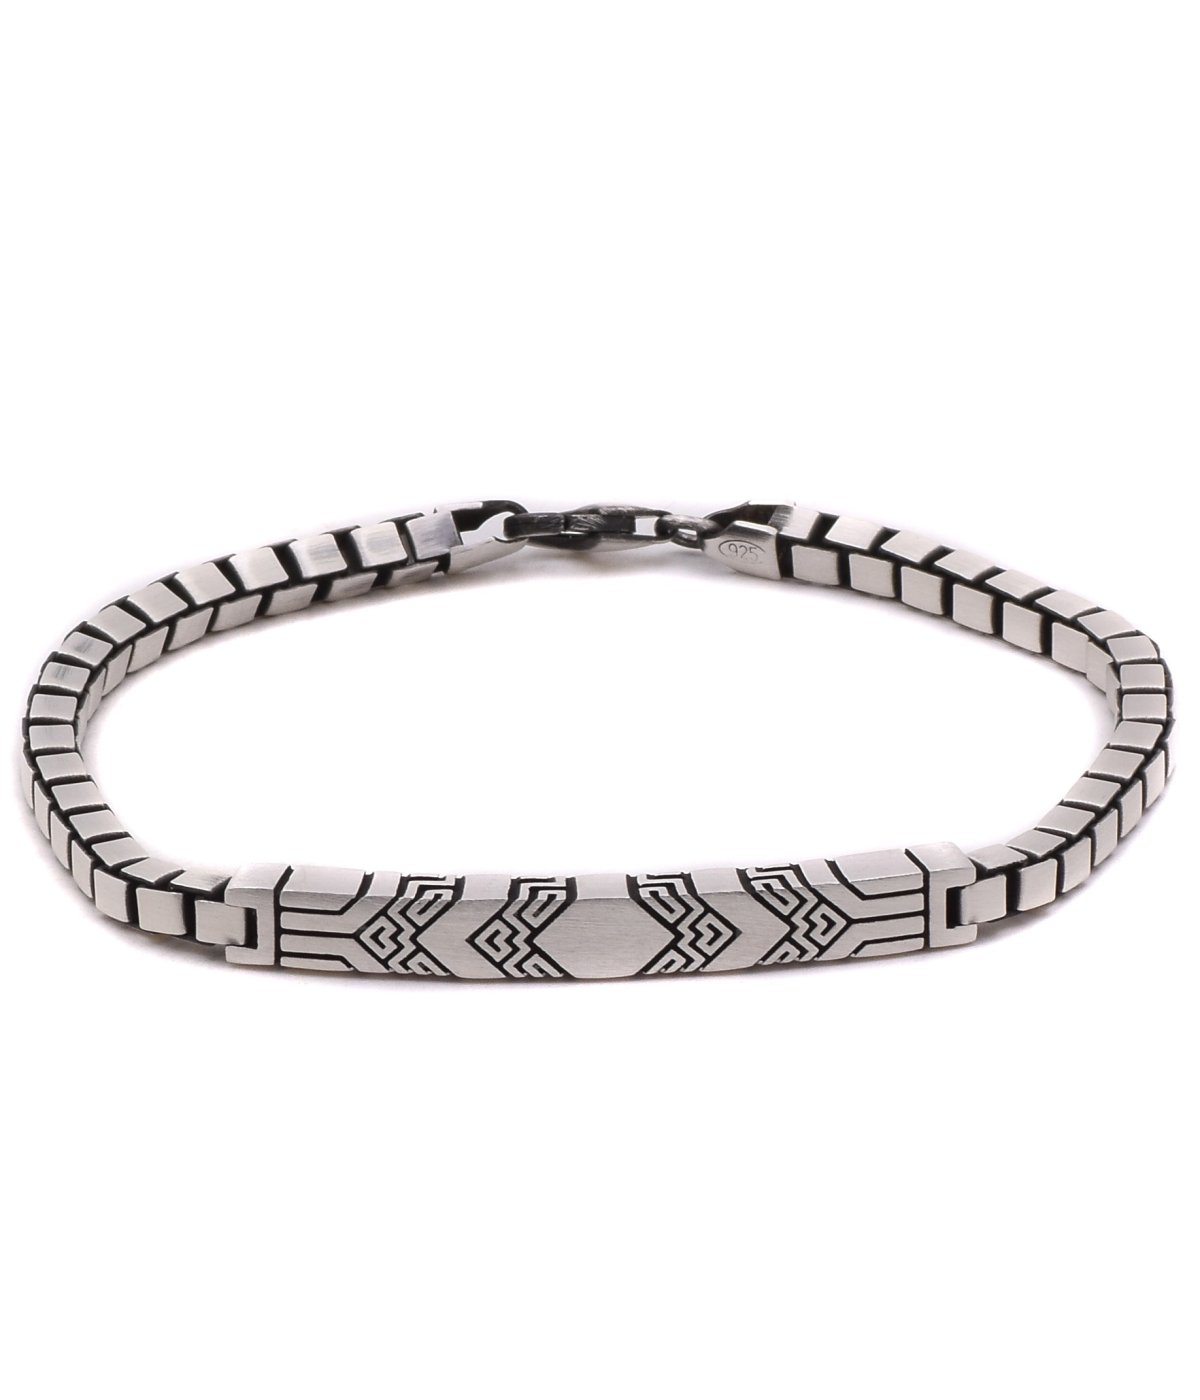 Reveal more than 161 gents silver bracelet design latest